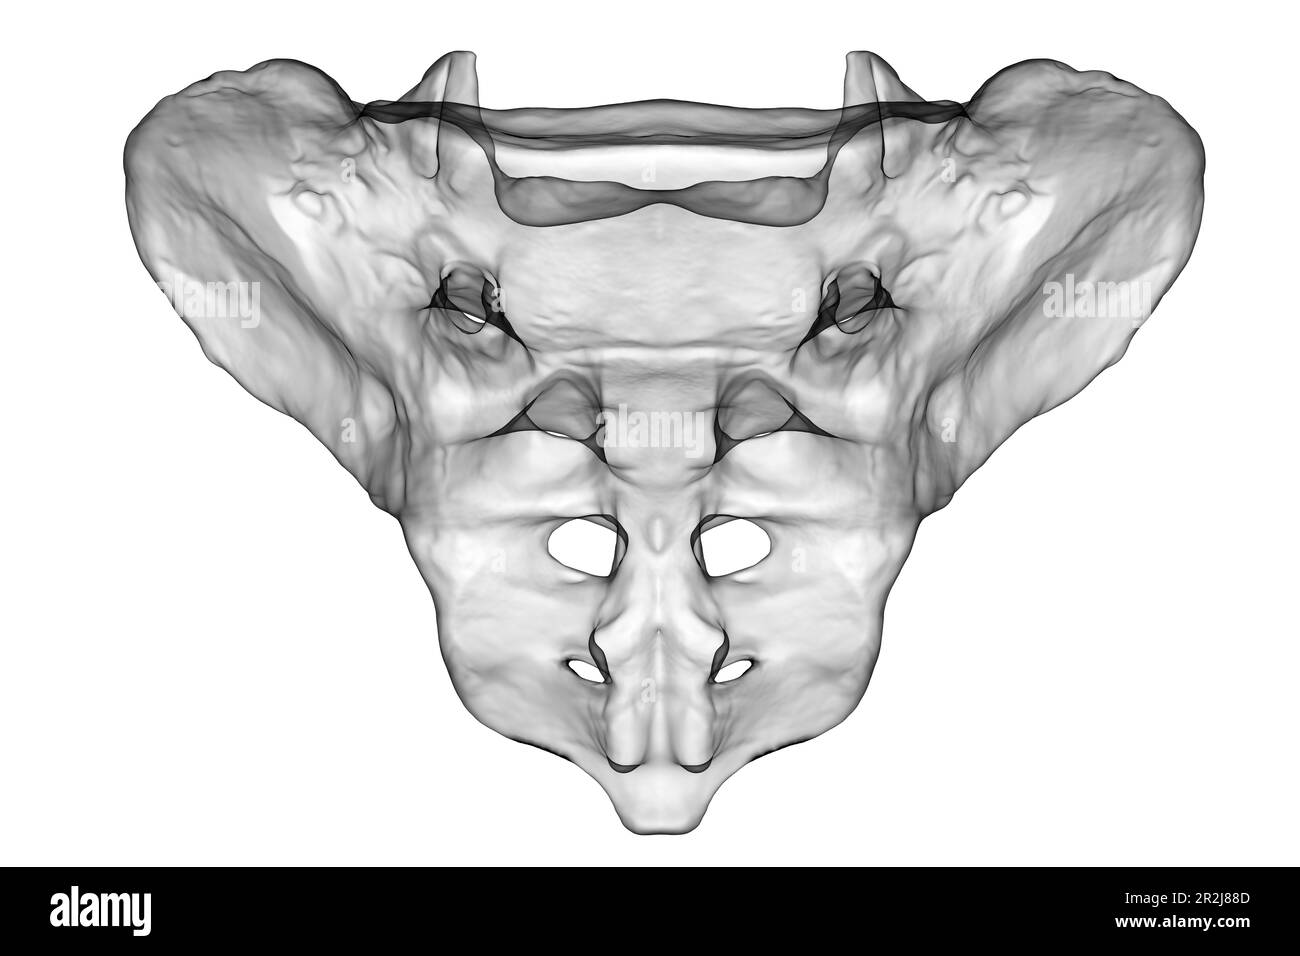 Sacrum bone, illustration Stock Photo